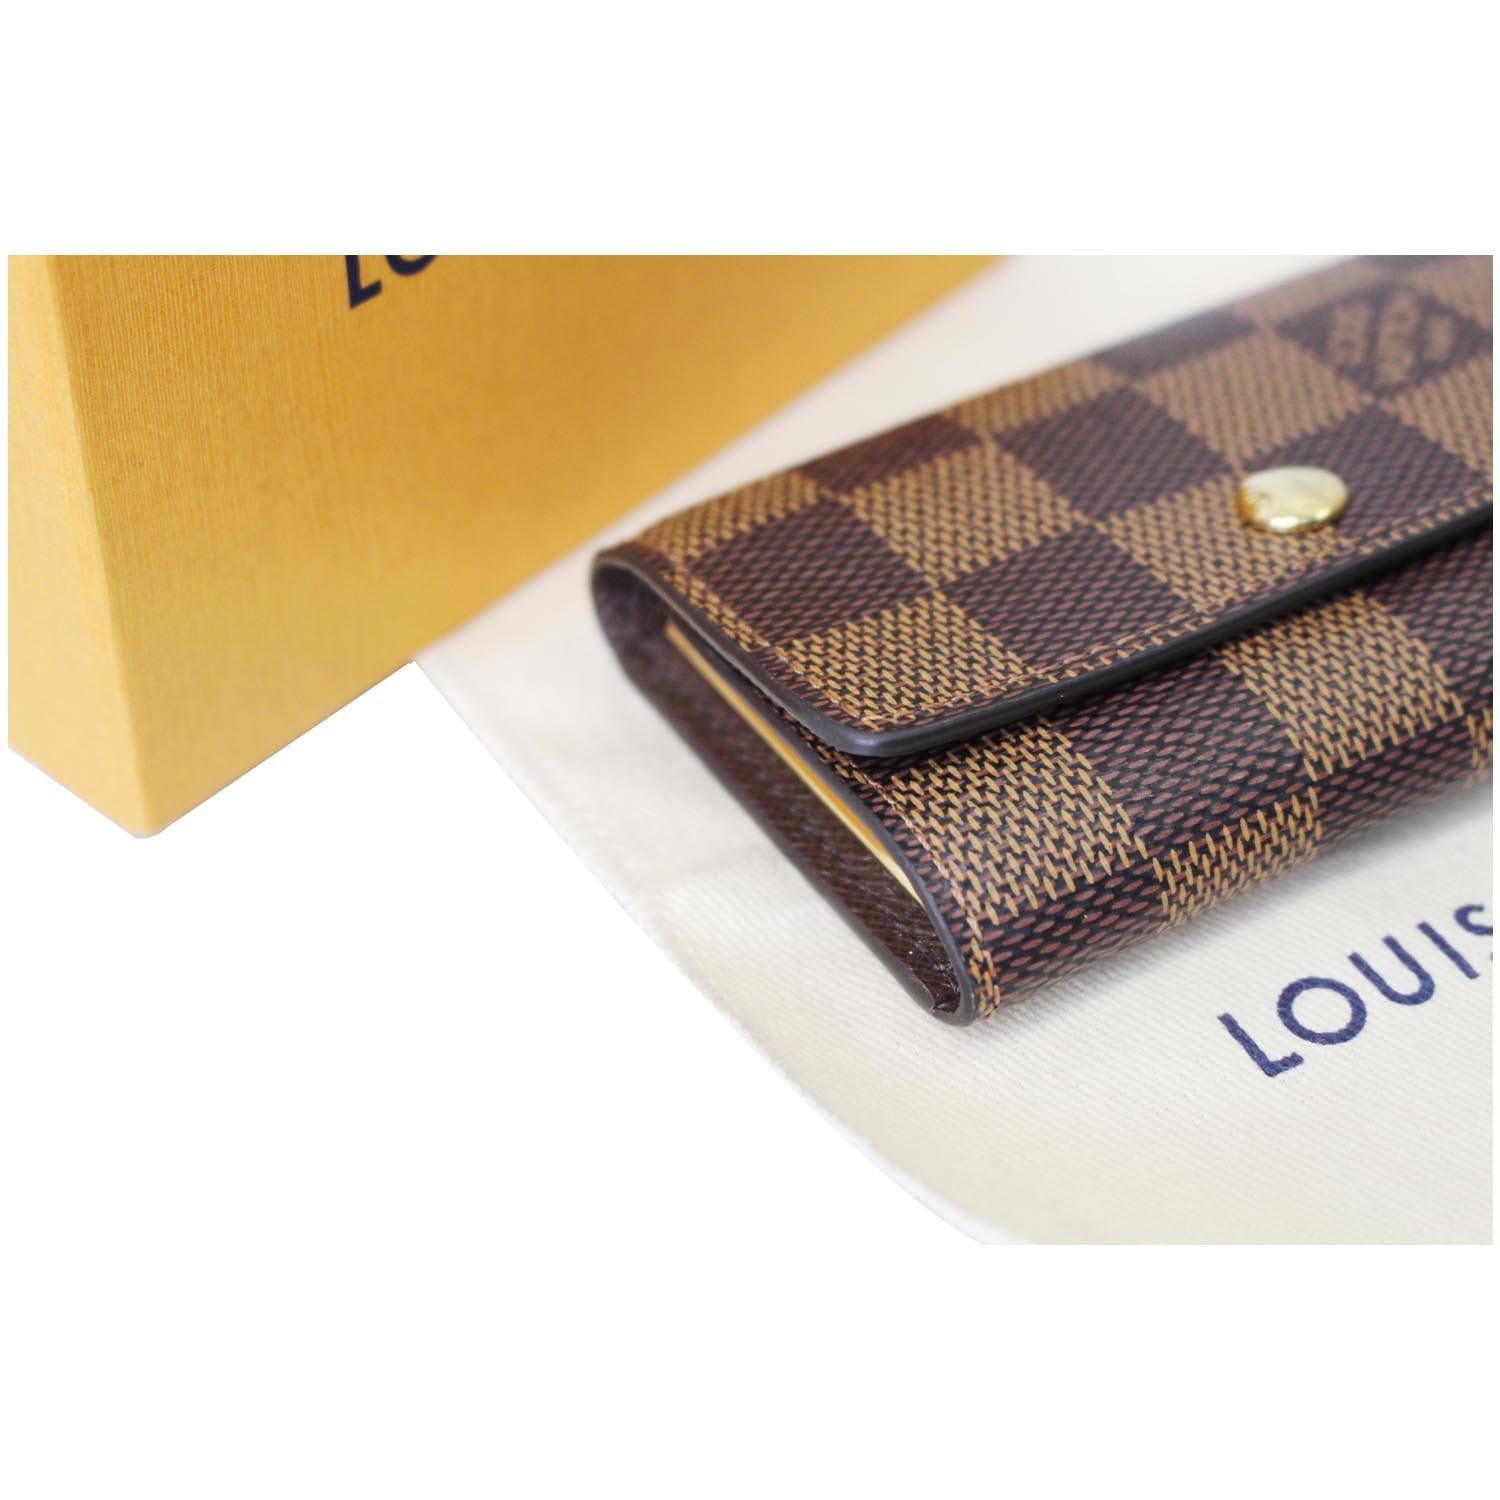 Louis Vuitton Damier Ebene Expert Pen Case Holder 863272